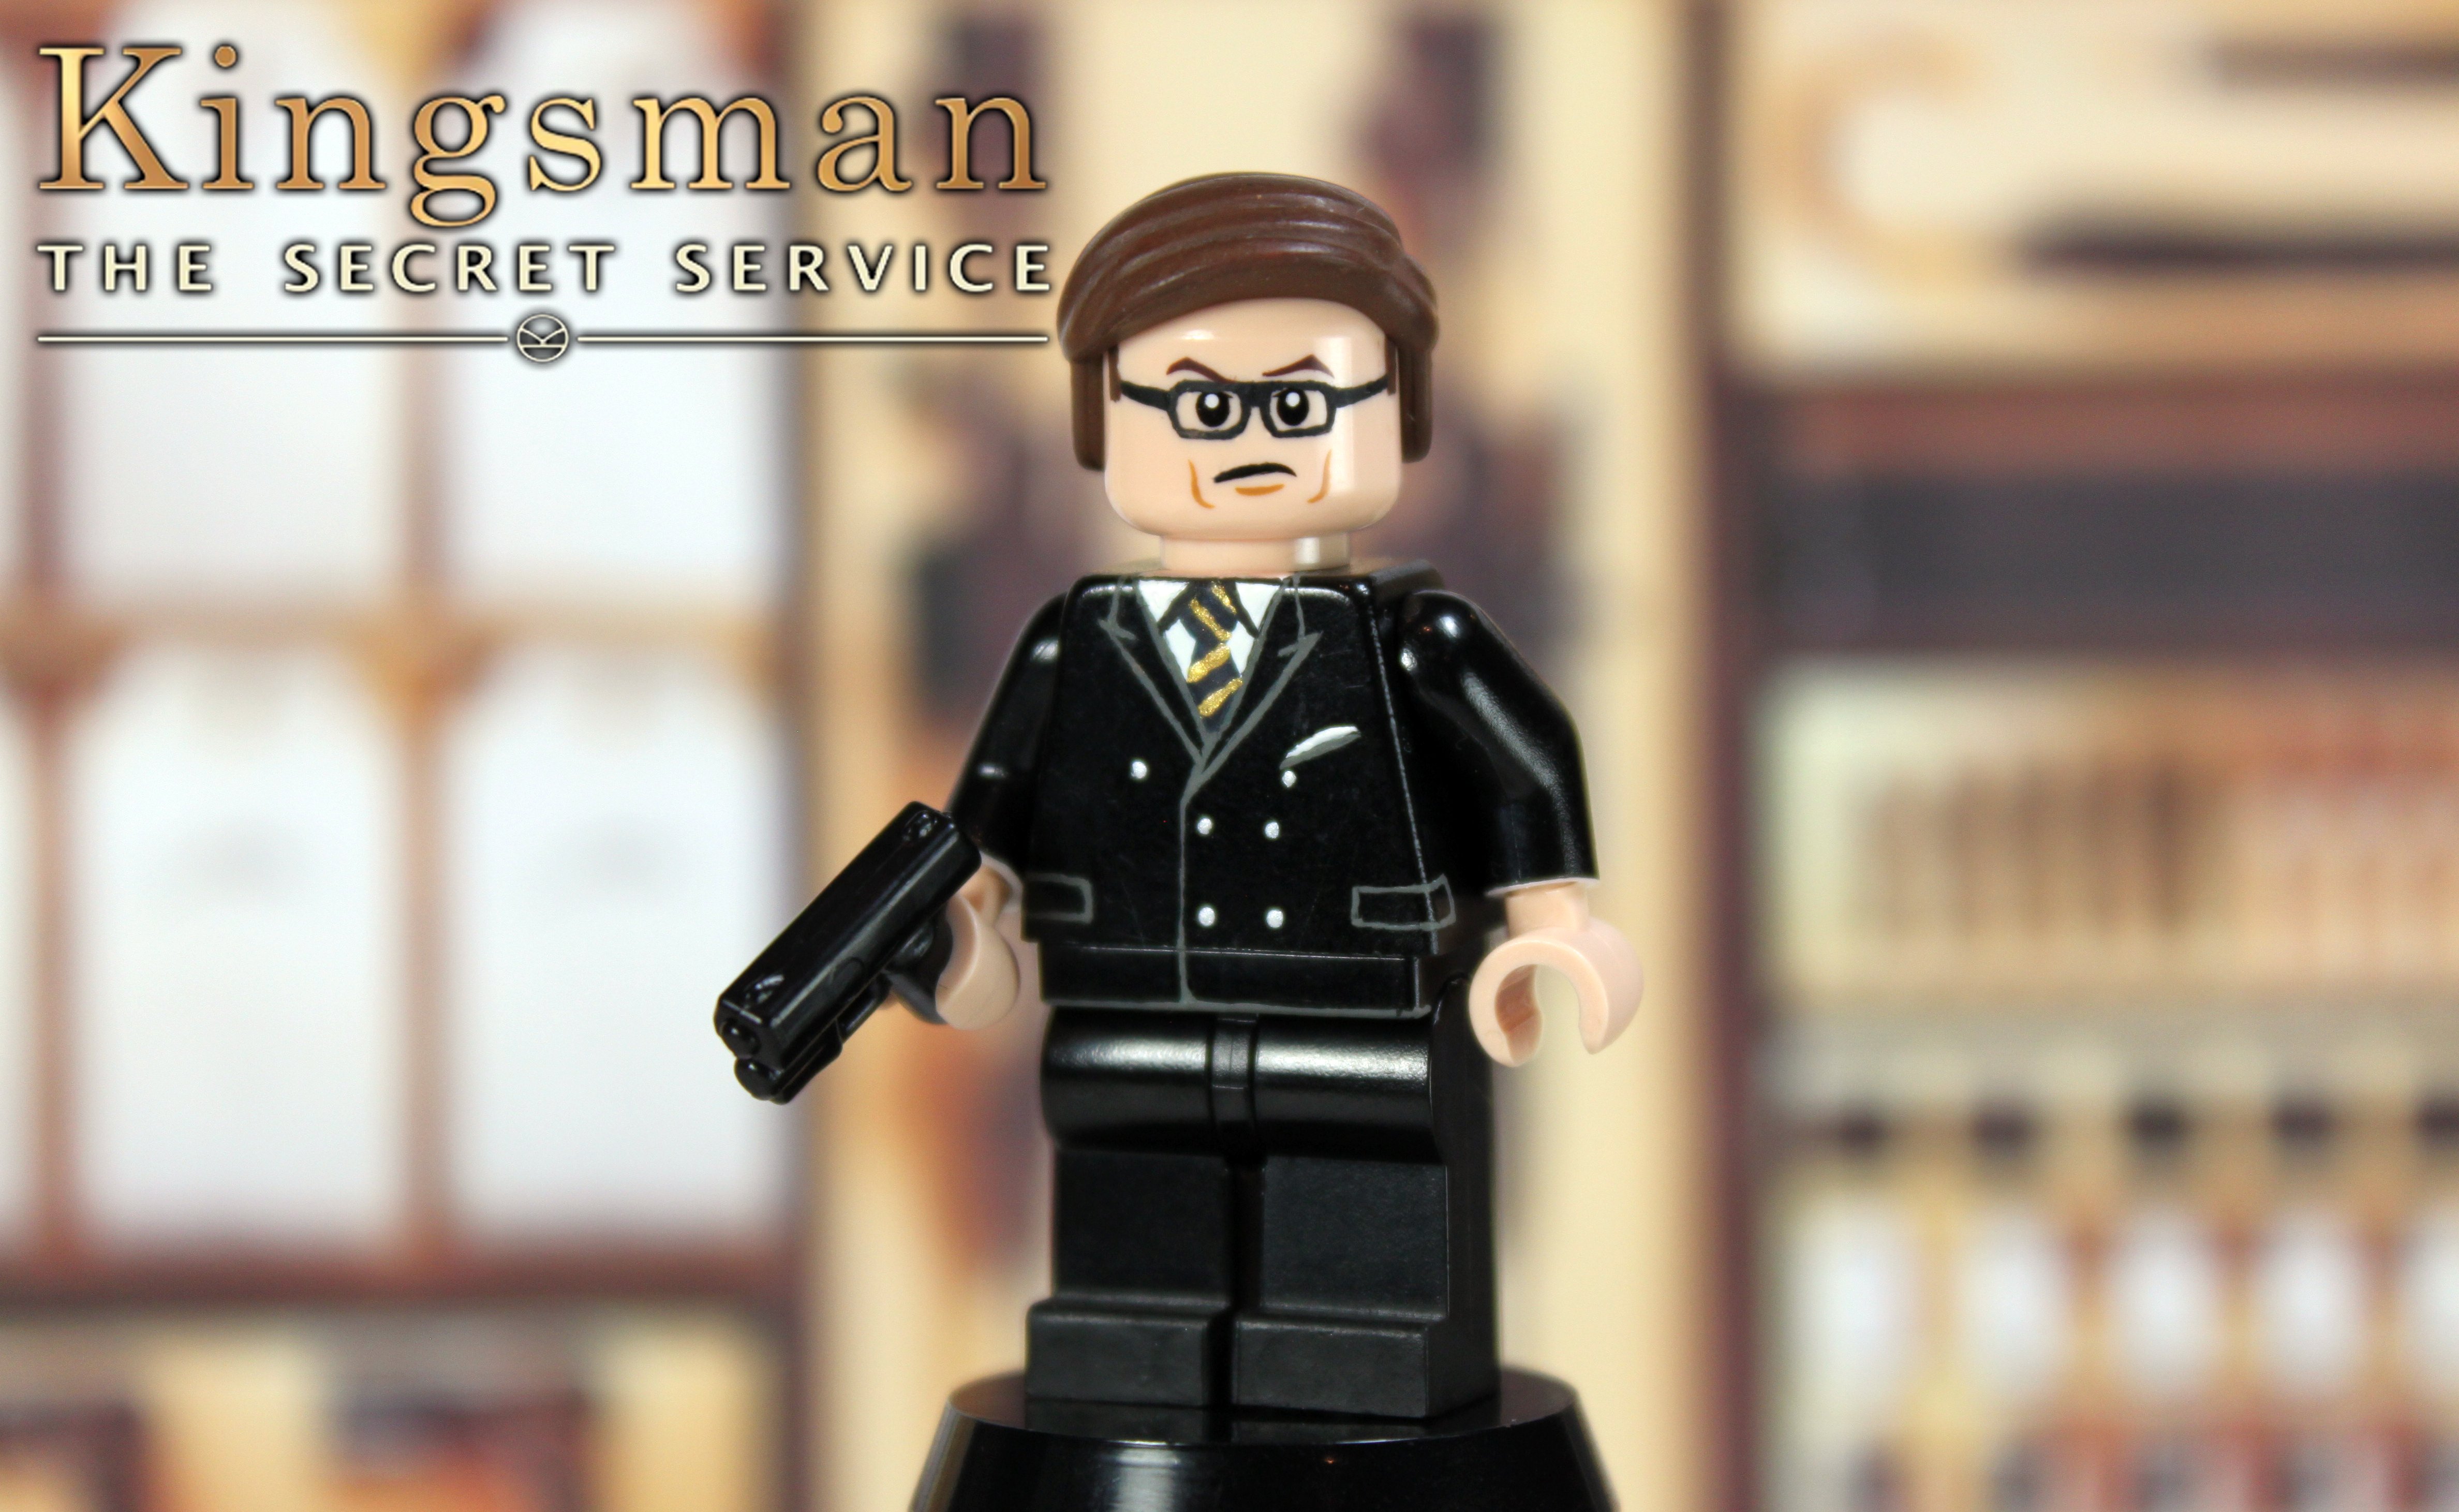 kingsman secret service, Sci fi, Action, Adventure, Comedy, Crime, Kingsman, Secret, Service, Poster, Lego Wallpaper